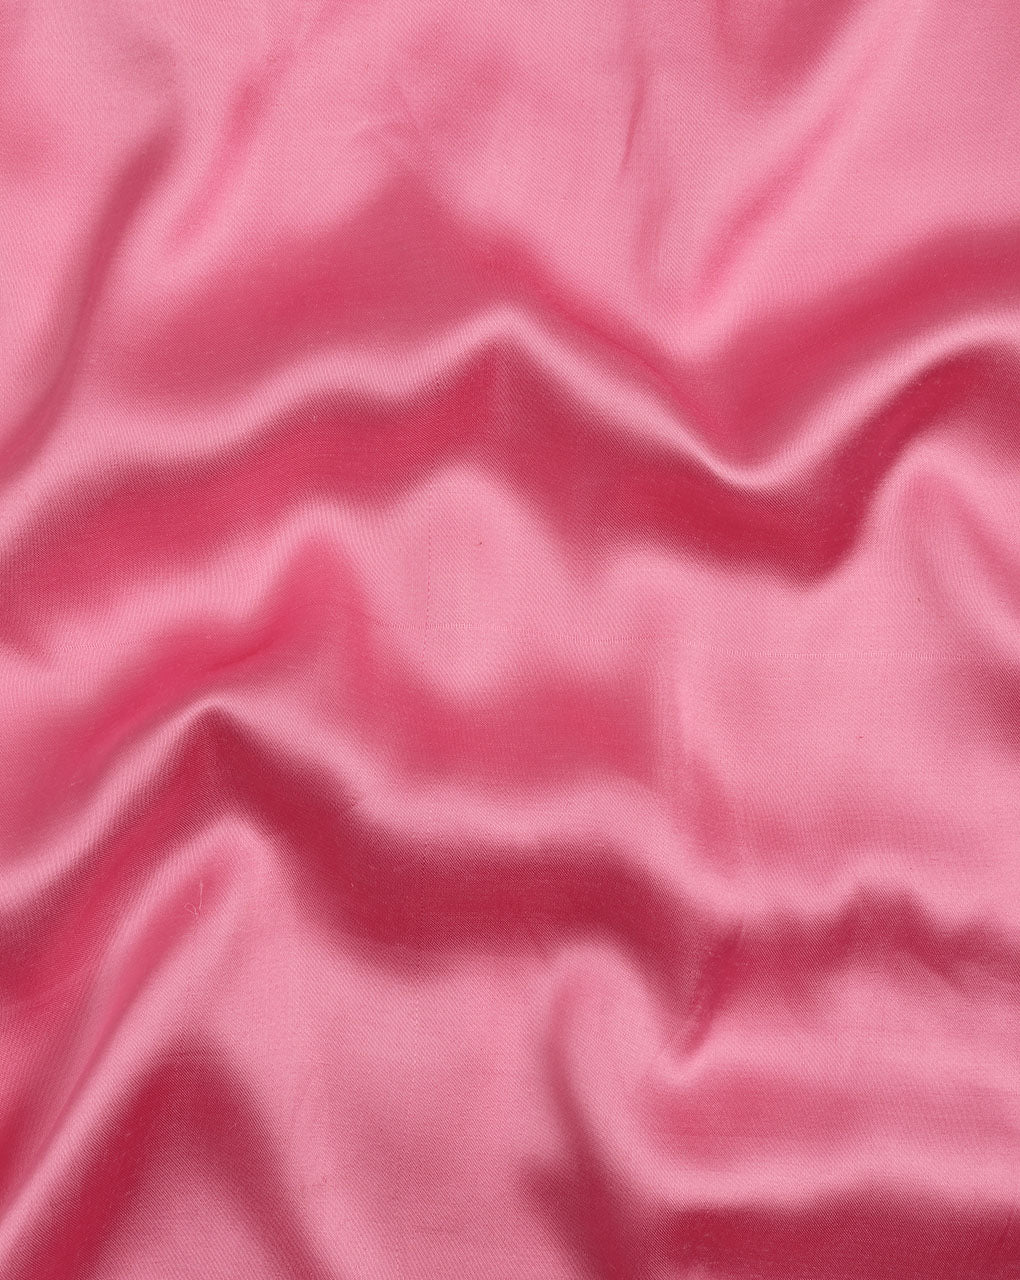 Light Pink Plain Modal Satin Fabric - Fabriclore.com